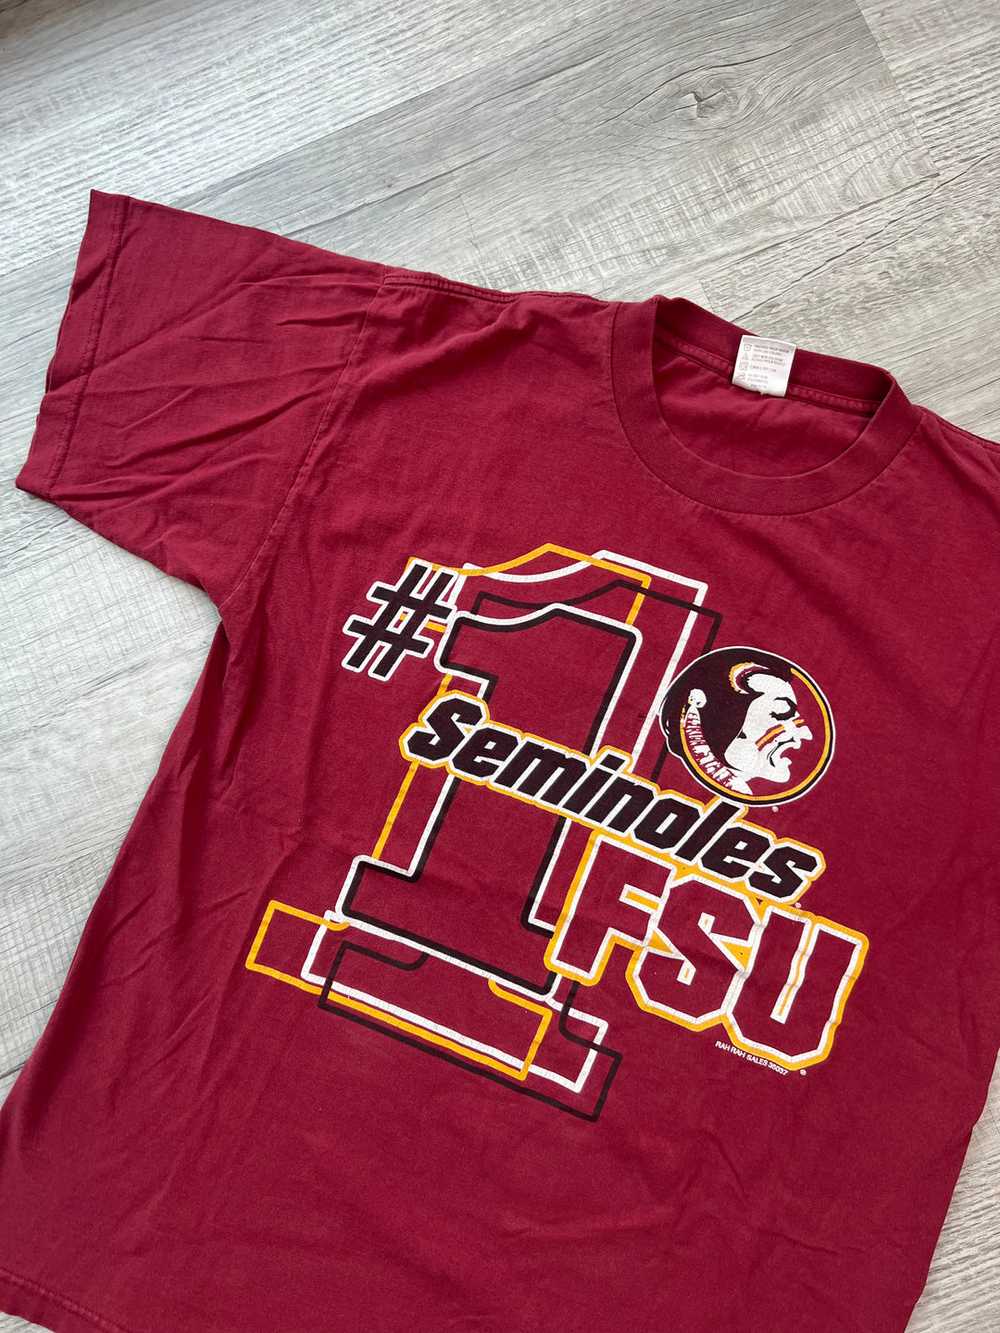 Vintage Florida State Seminoles T-shirt - image 2